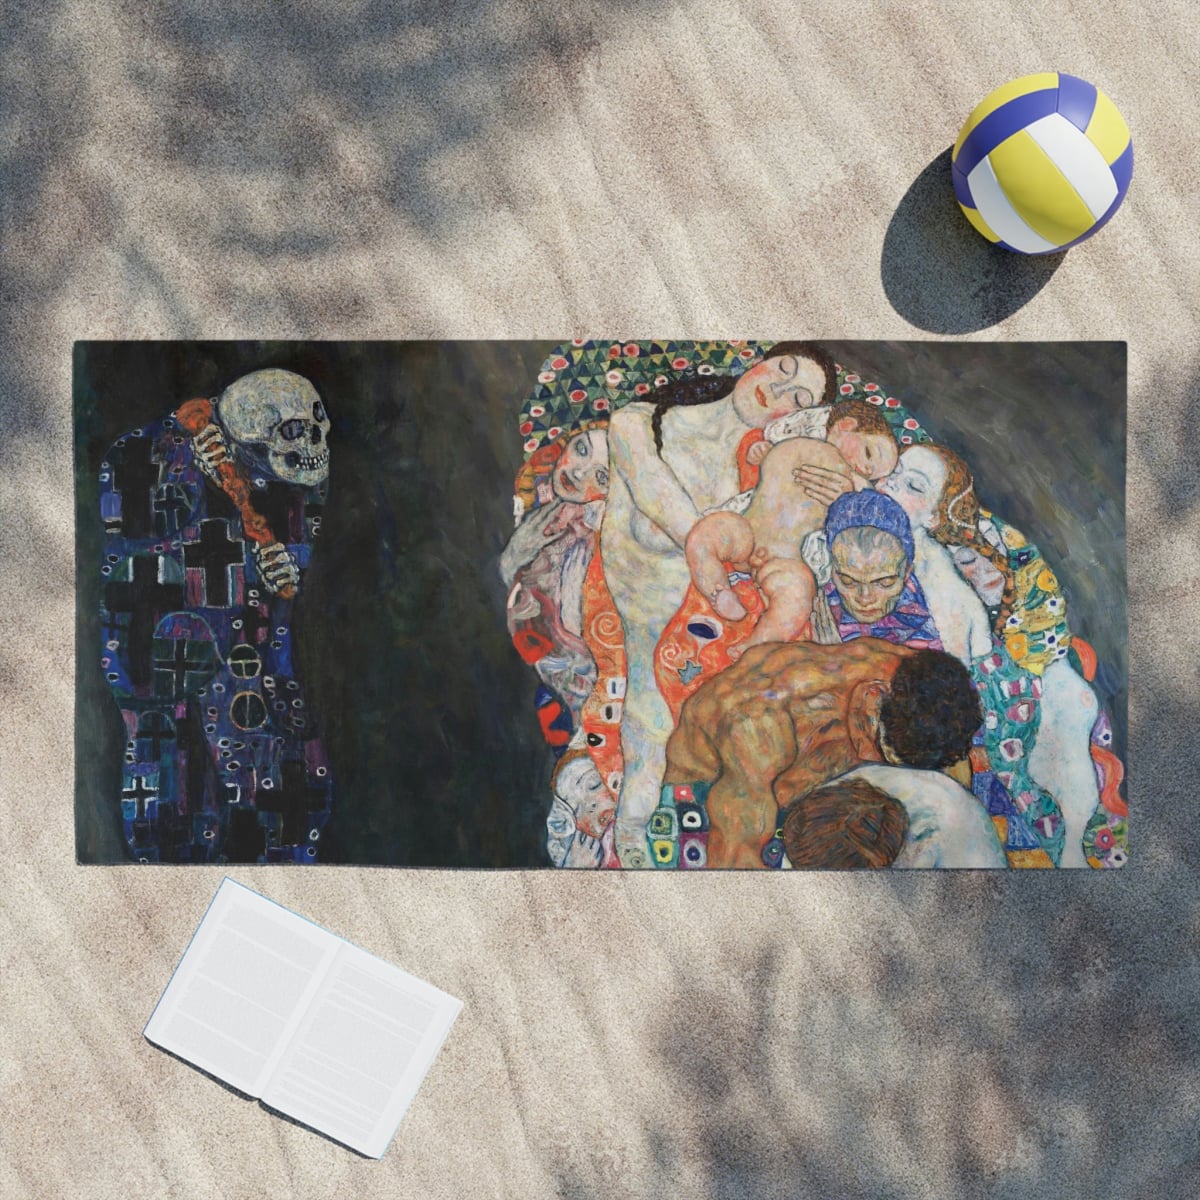 Death and Life by Gustav Klimt Art Beach Towels